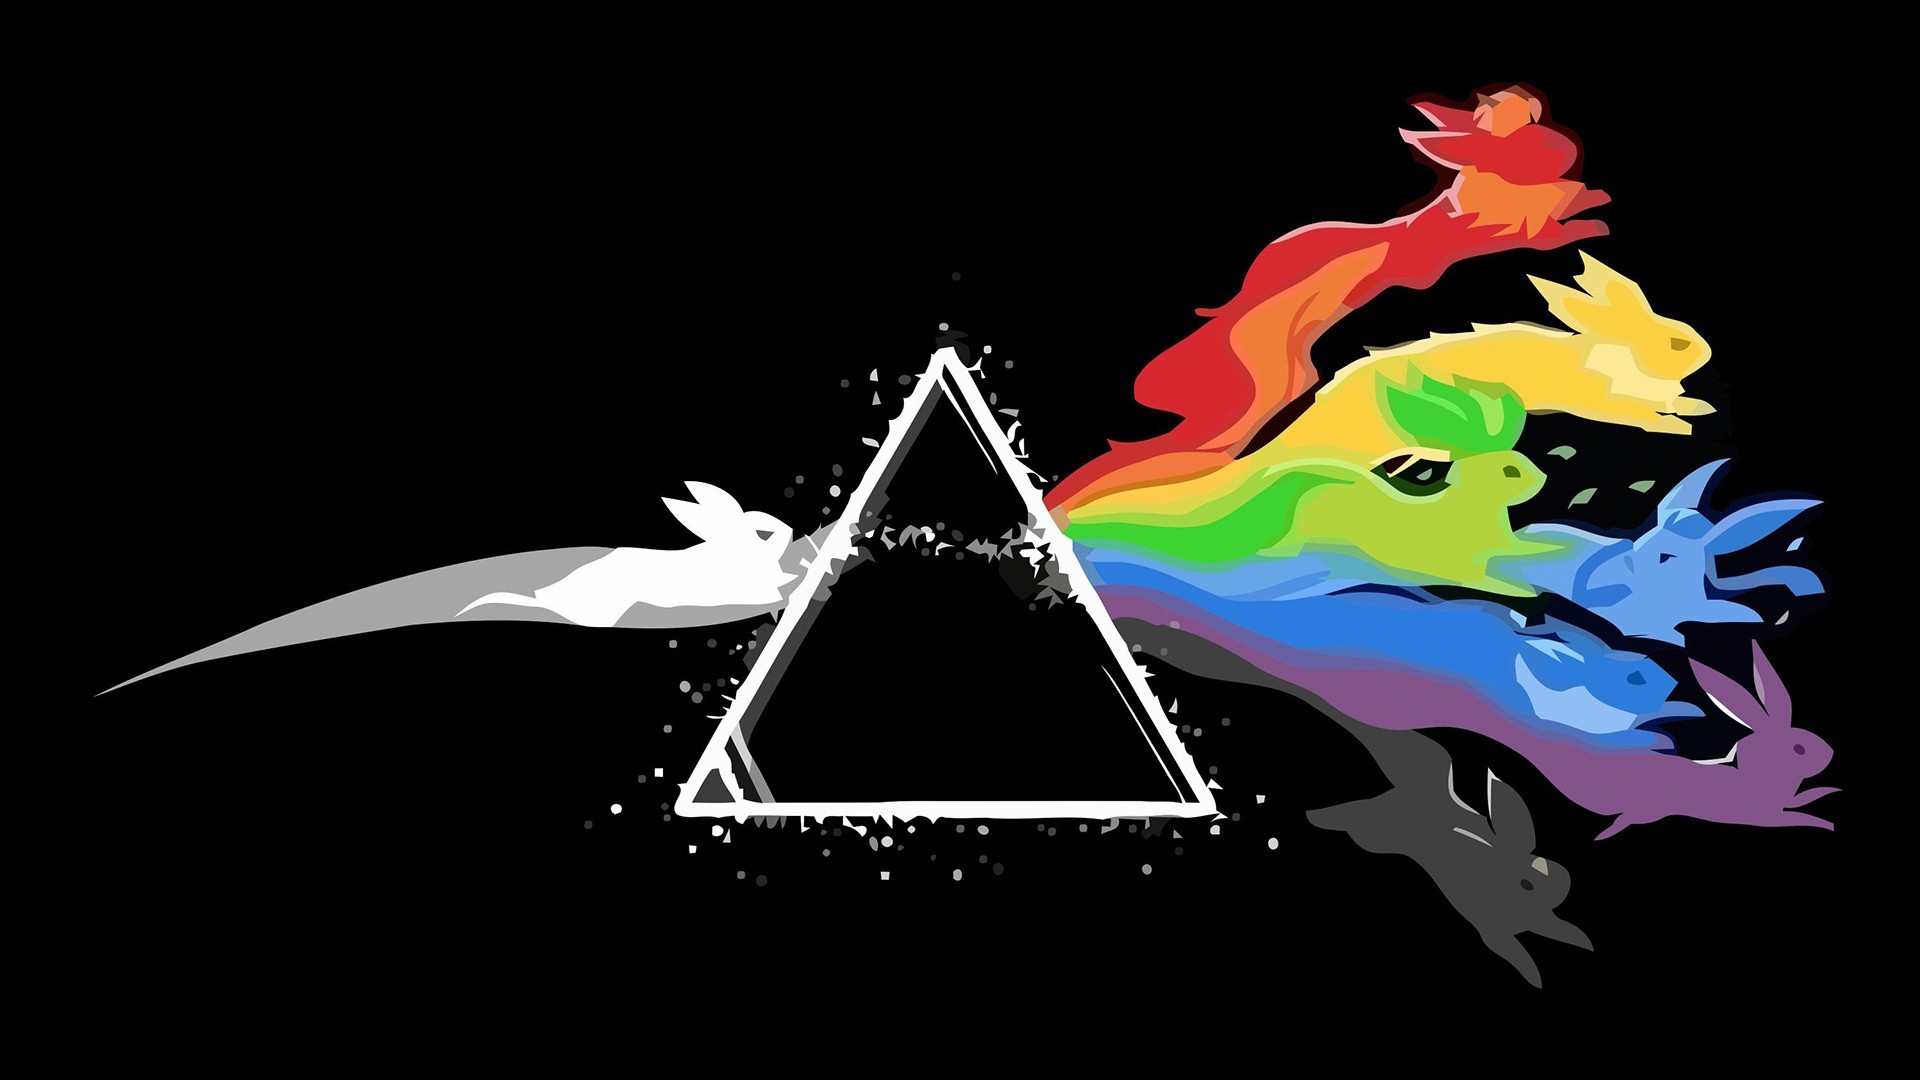 General 1920x1080 Pink Floyd Pokémon Eevee digital art colorful triangle artwork Flareon Jolteon Leafeon Glaceon Vaporeon Espeon Umbreon rainbows